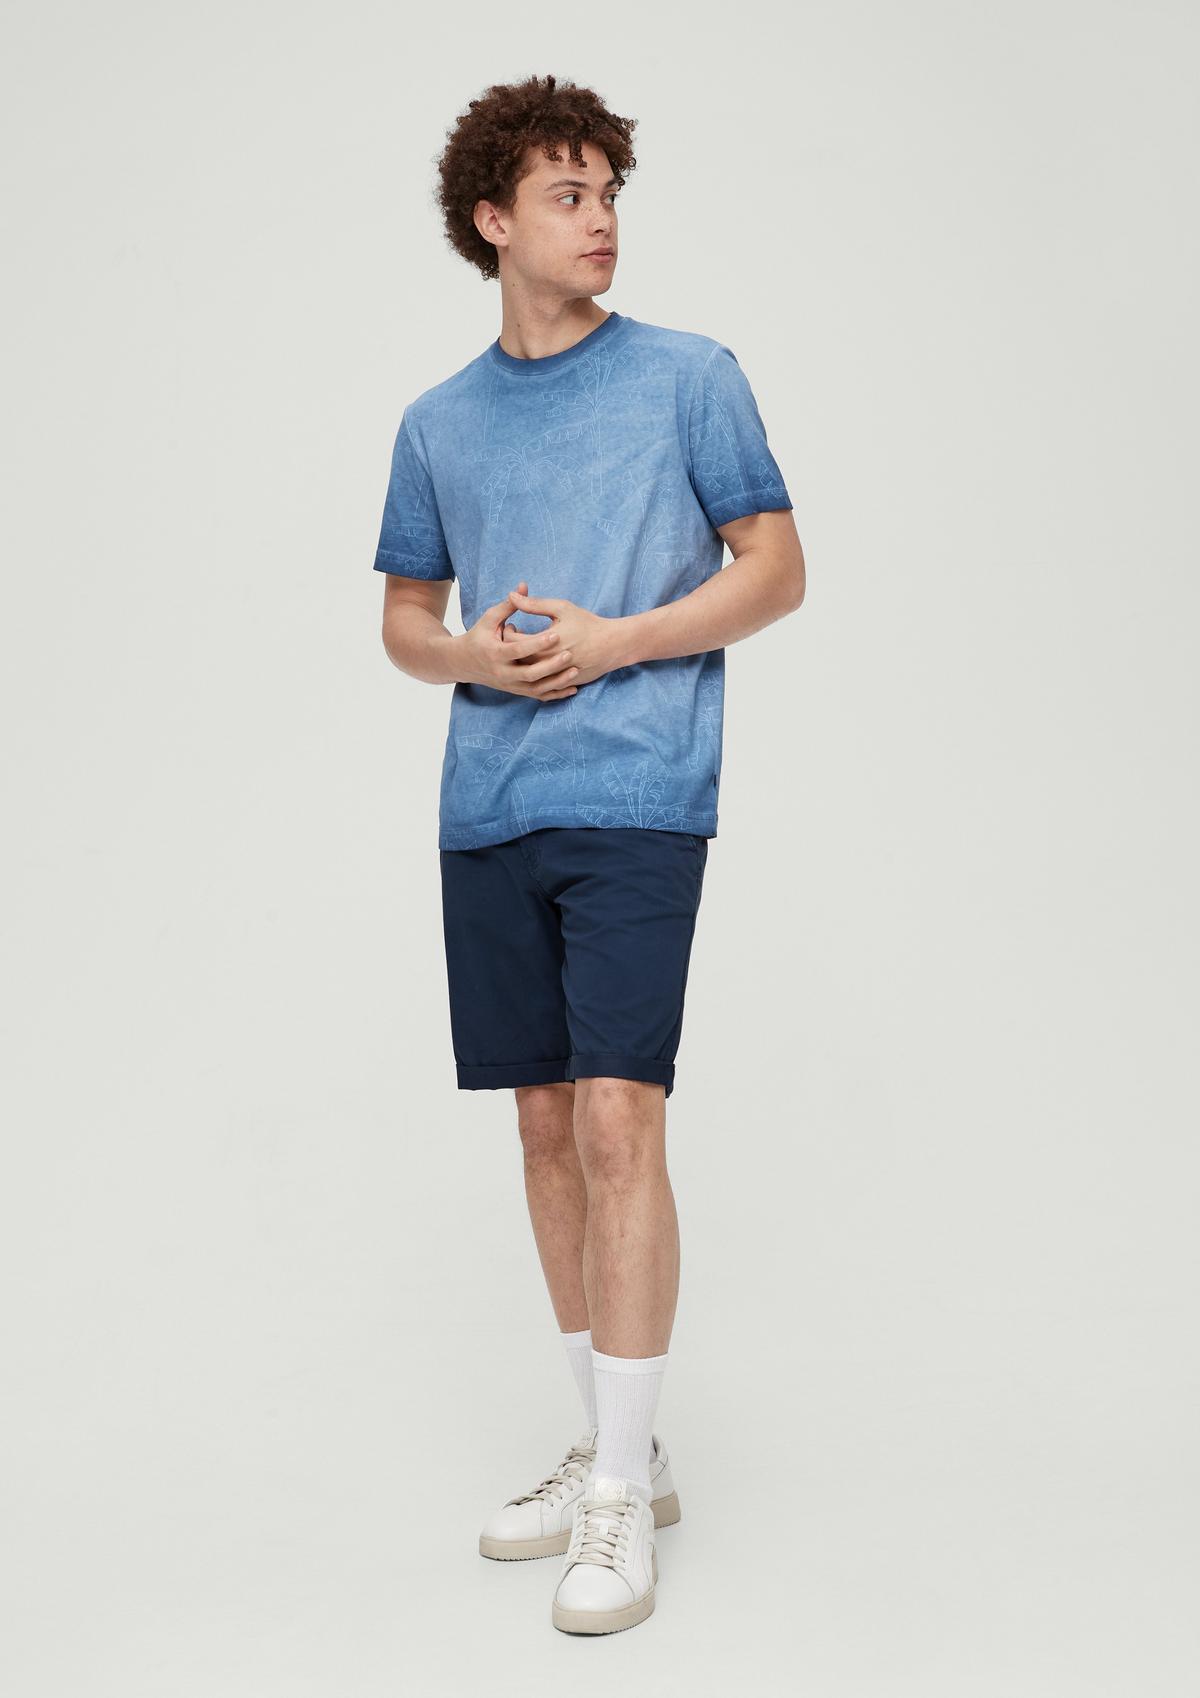 s.Oliver John: Bermuda shorts with a dobby texture